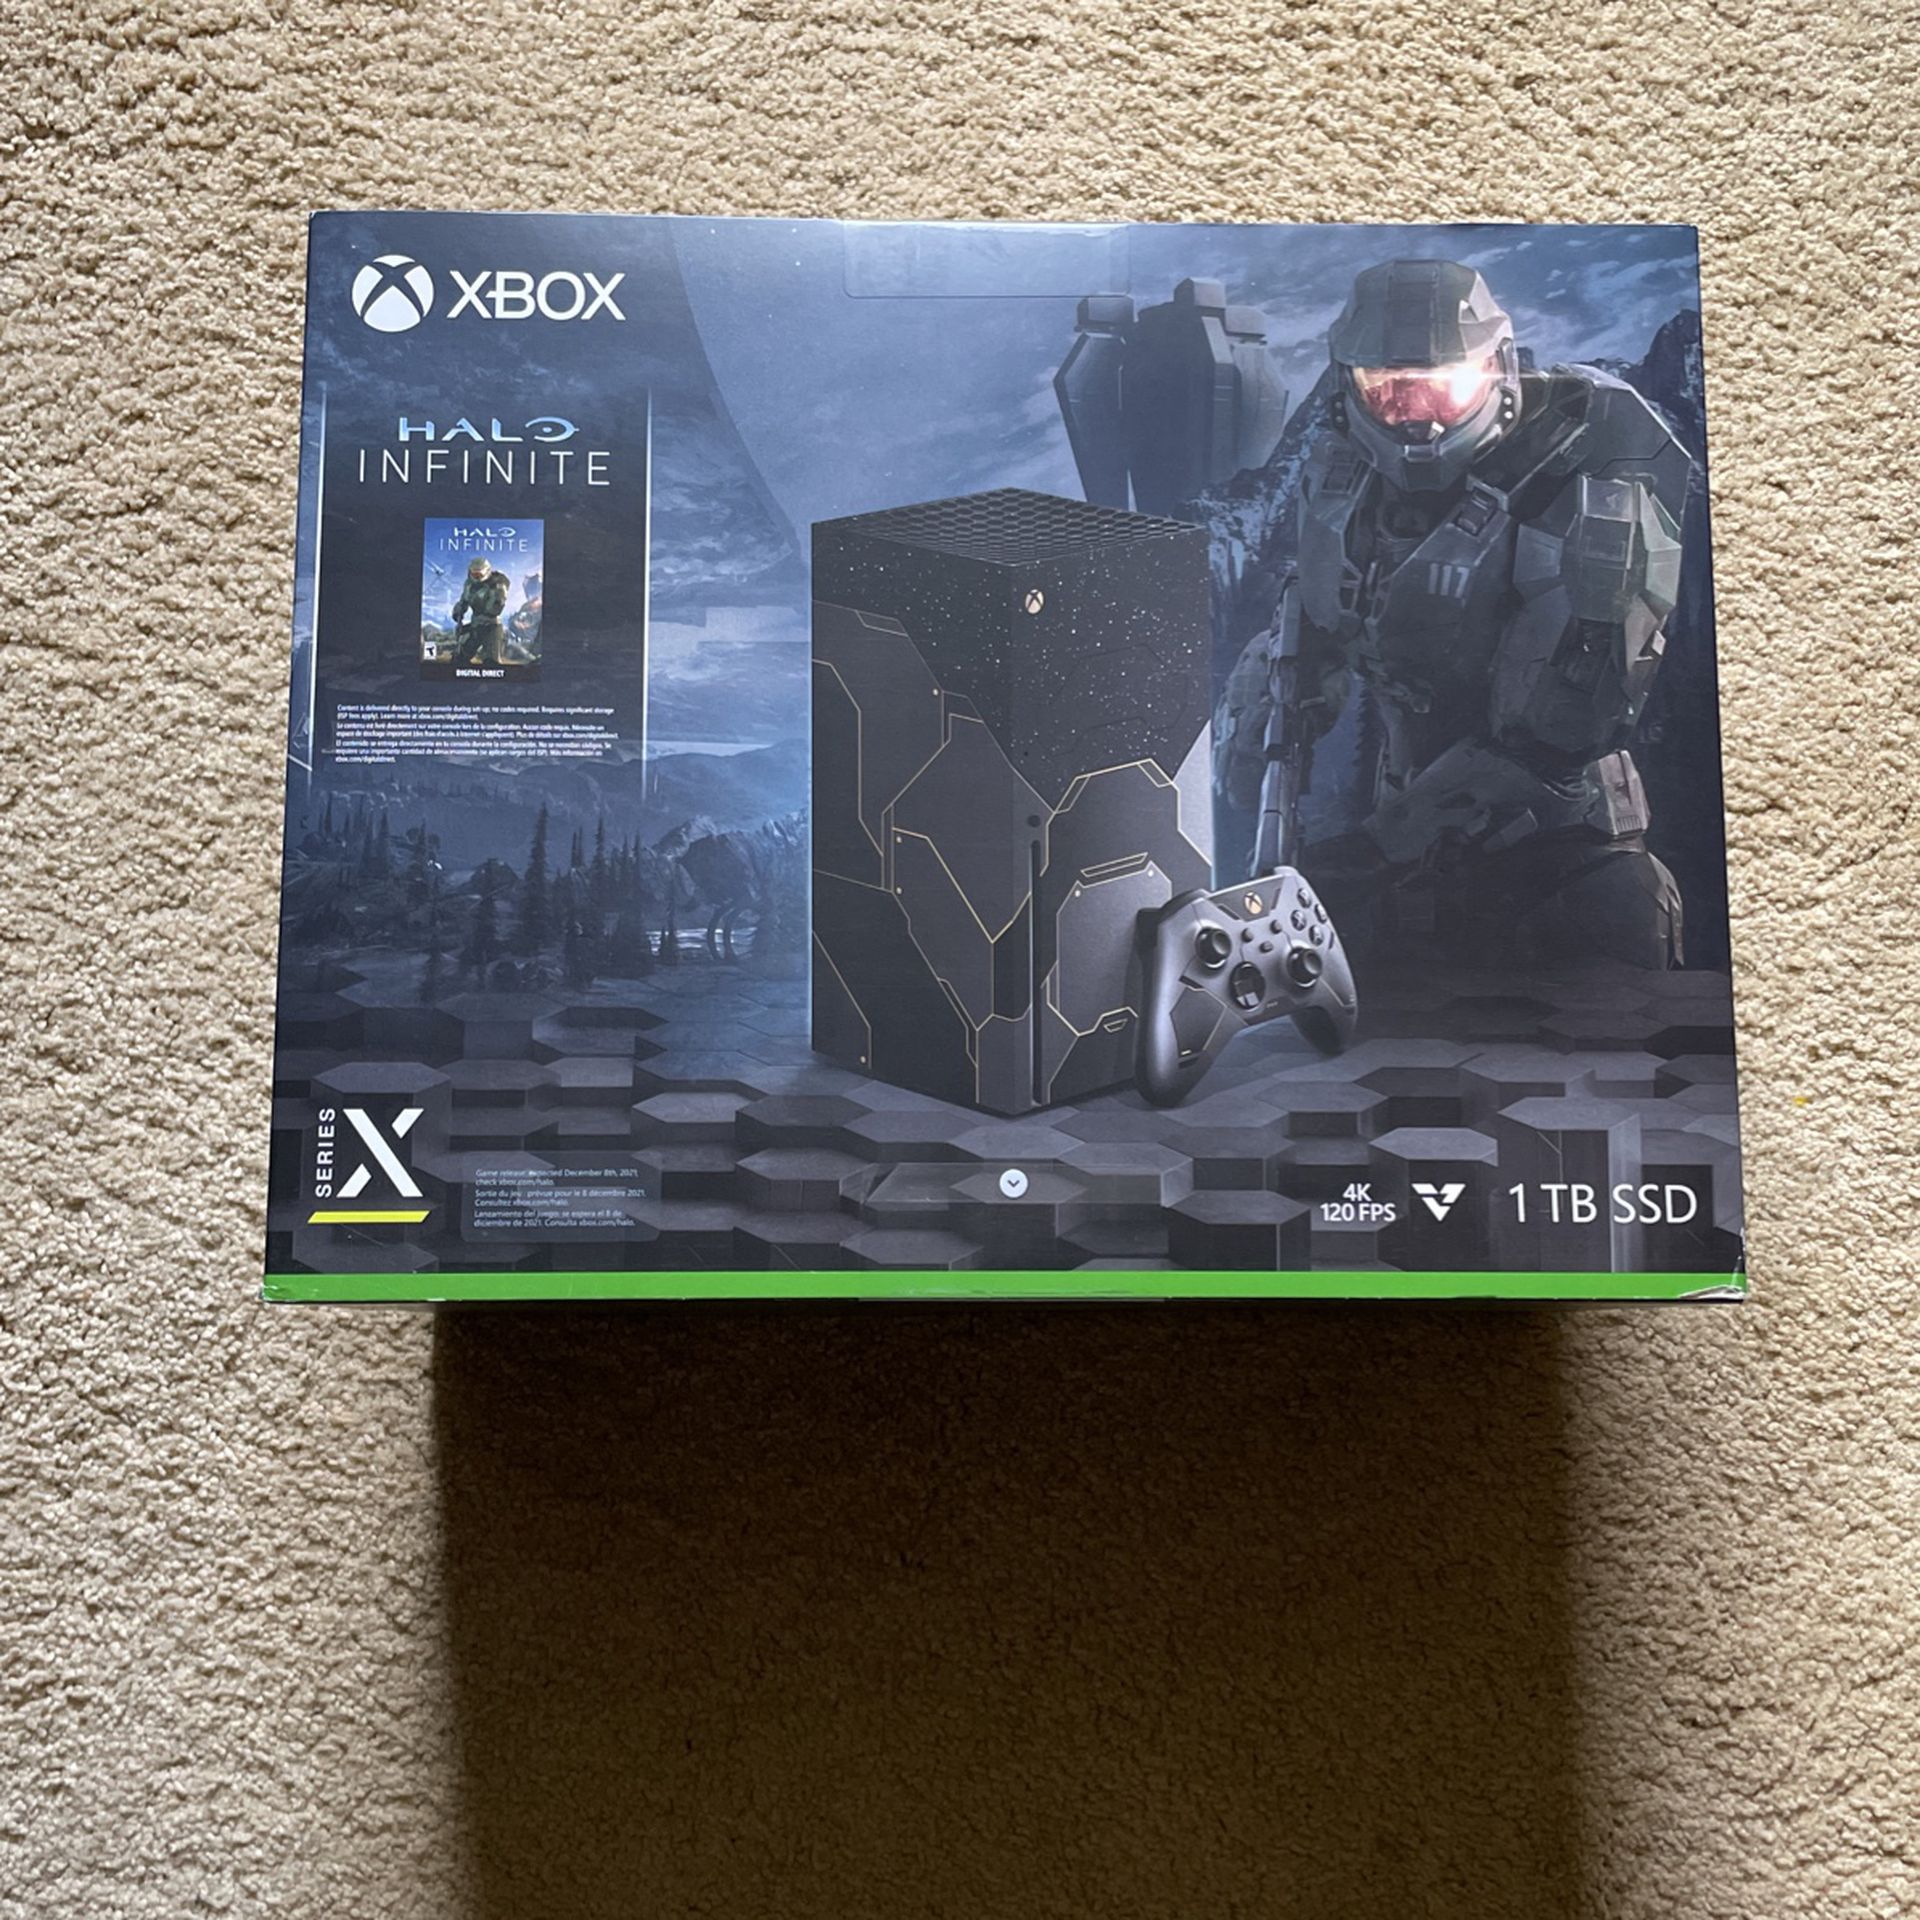 Microsoft Xbox Series X 1TB Halo Infinite Limited Edition Console